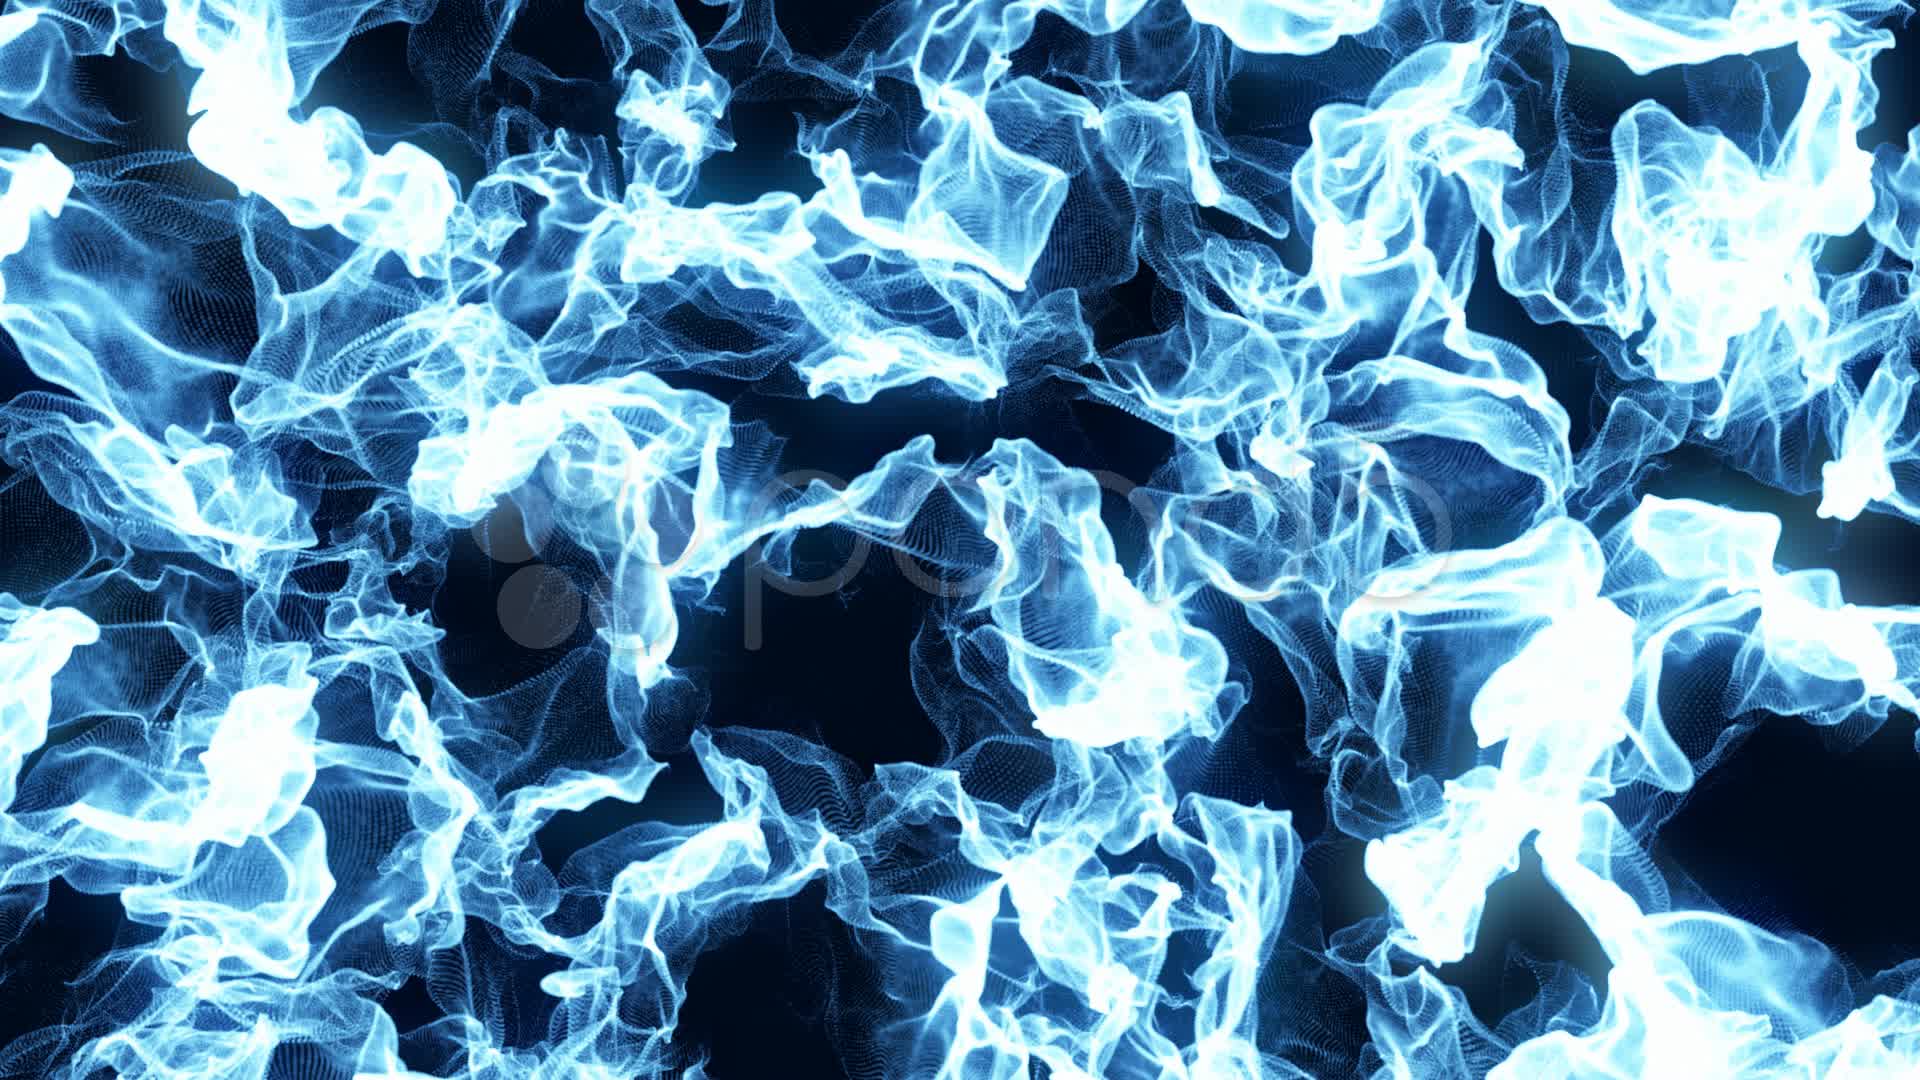 Video: Abstract Blue Fire Nexus Background loop